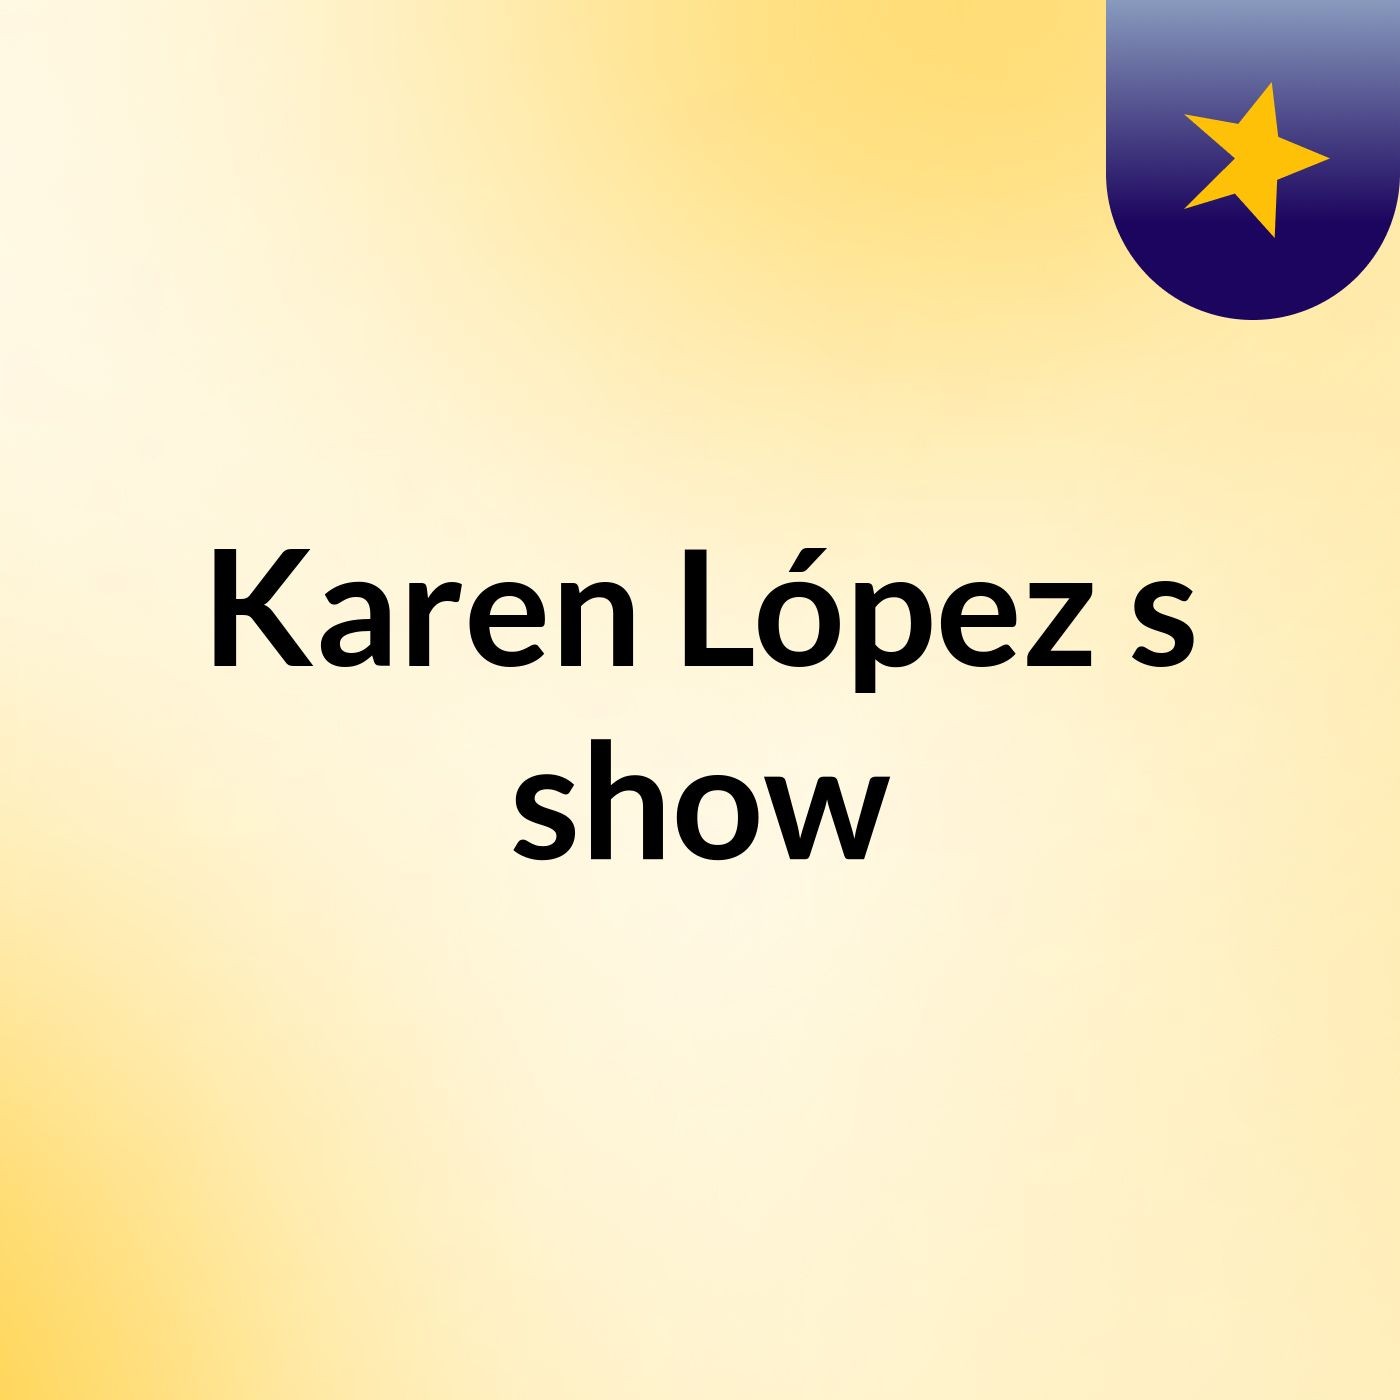 Karen López's show